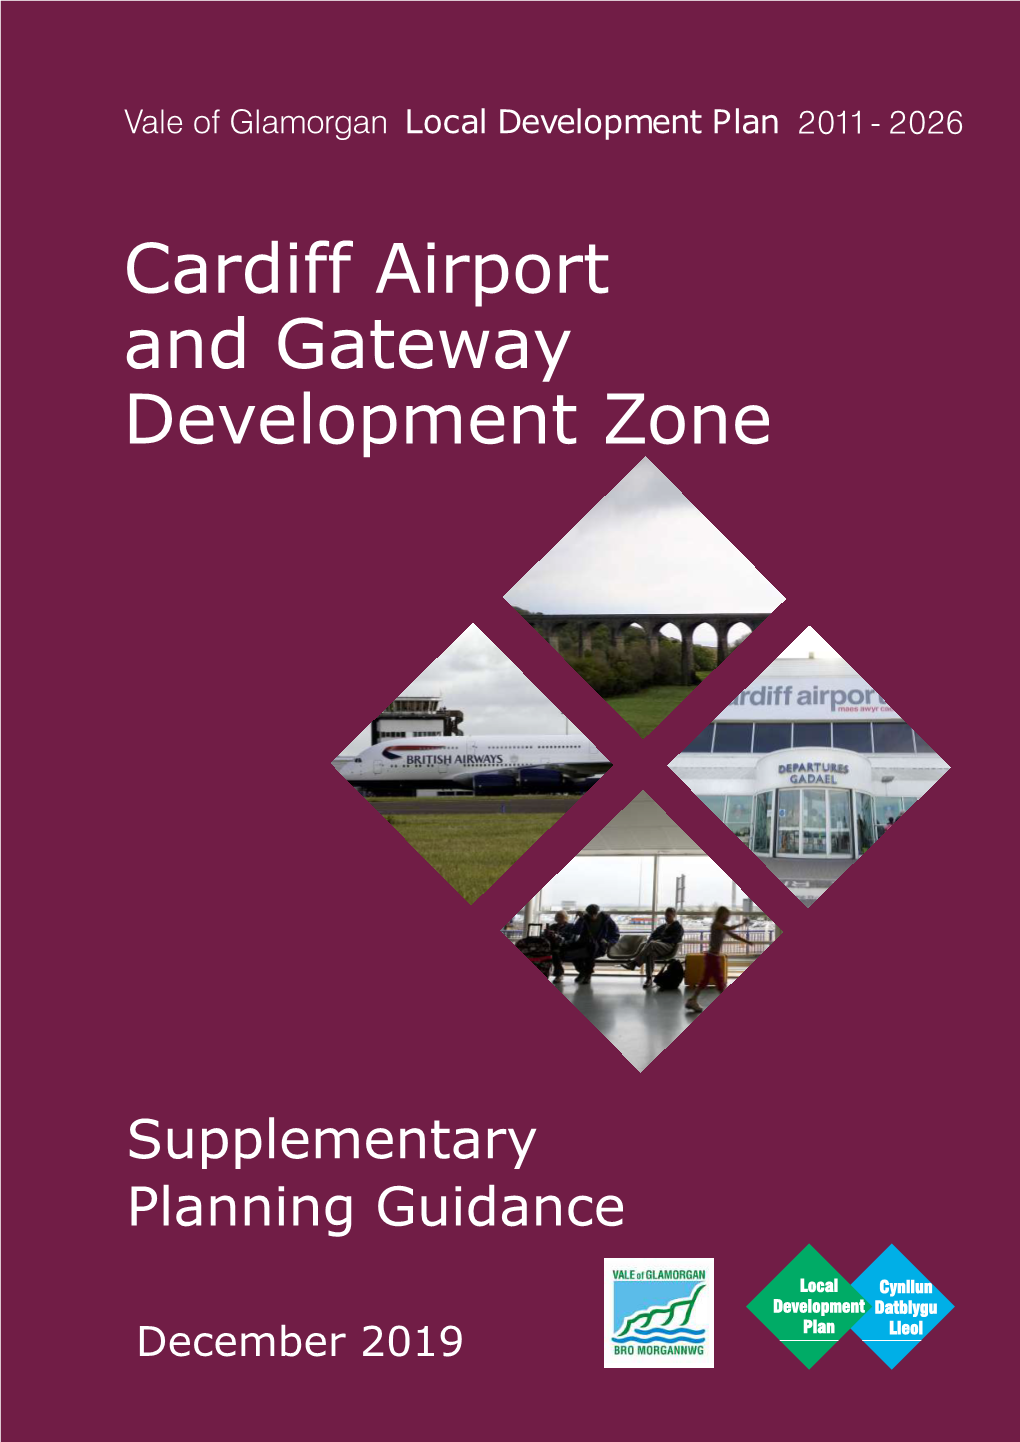 Cardiff Airport and Gateway Development Zone SPG 2019